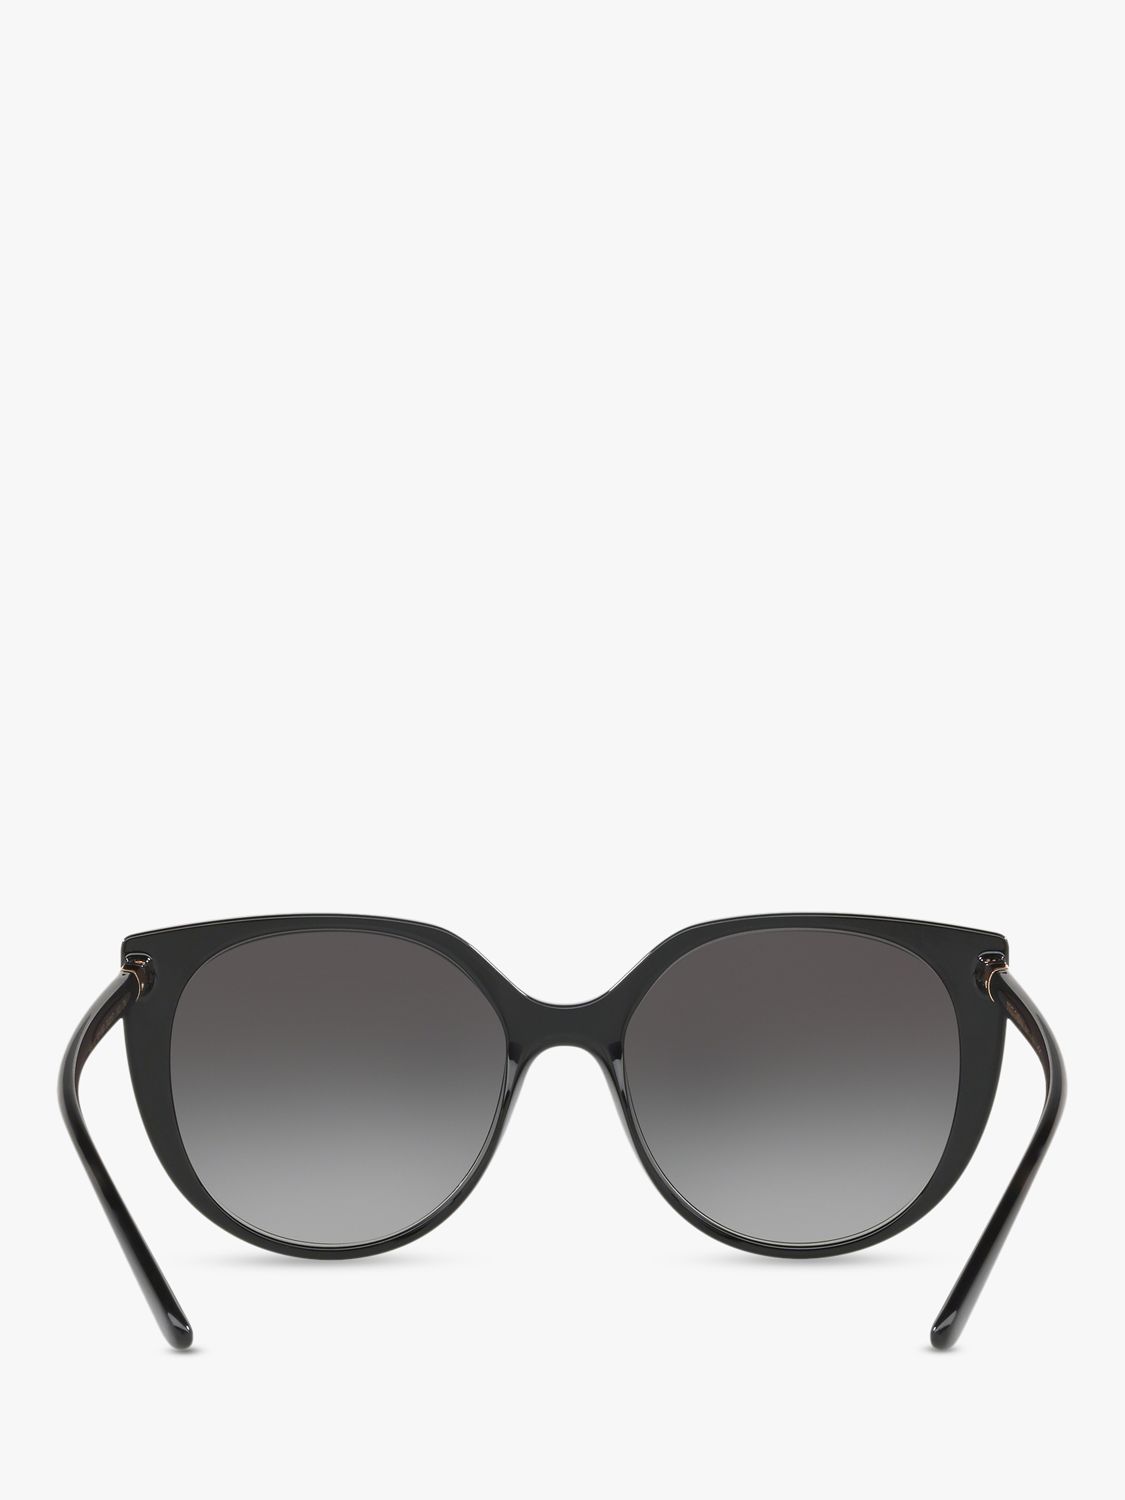 Dolce & Gabbana DG6119 Women's Oval Sunglasses, Matte Black/Grey ...